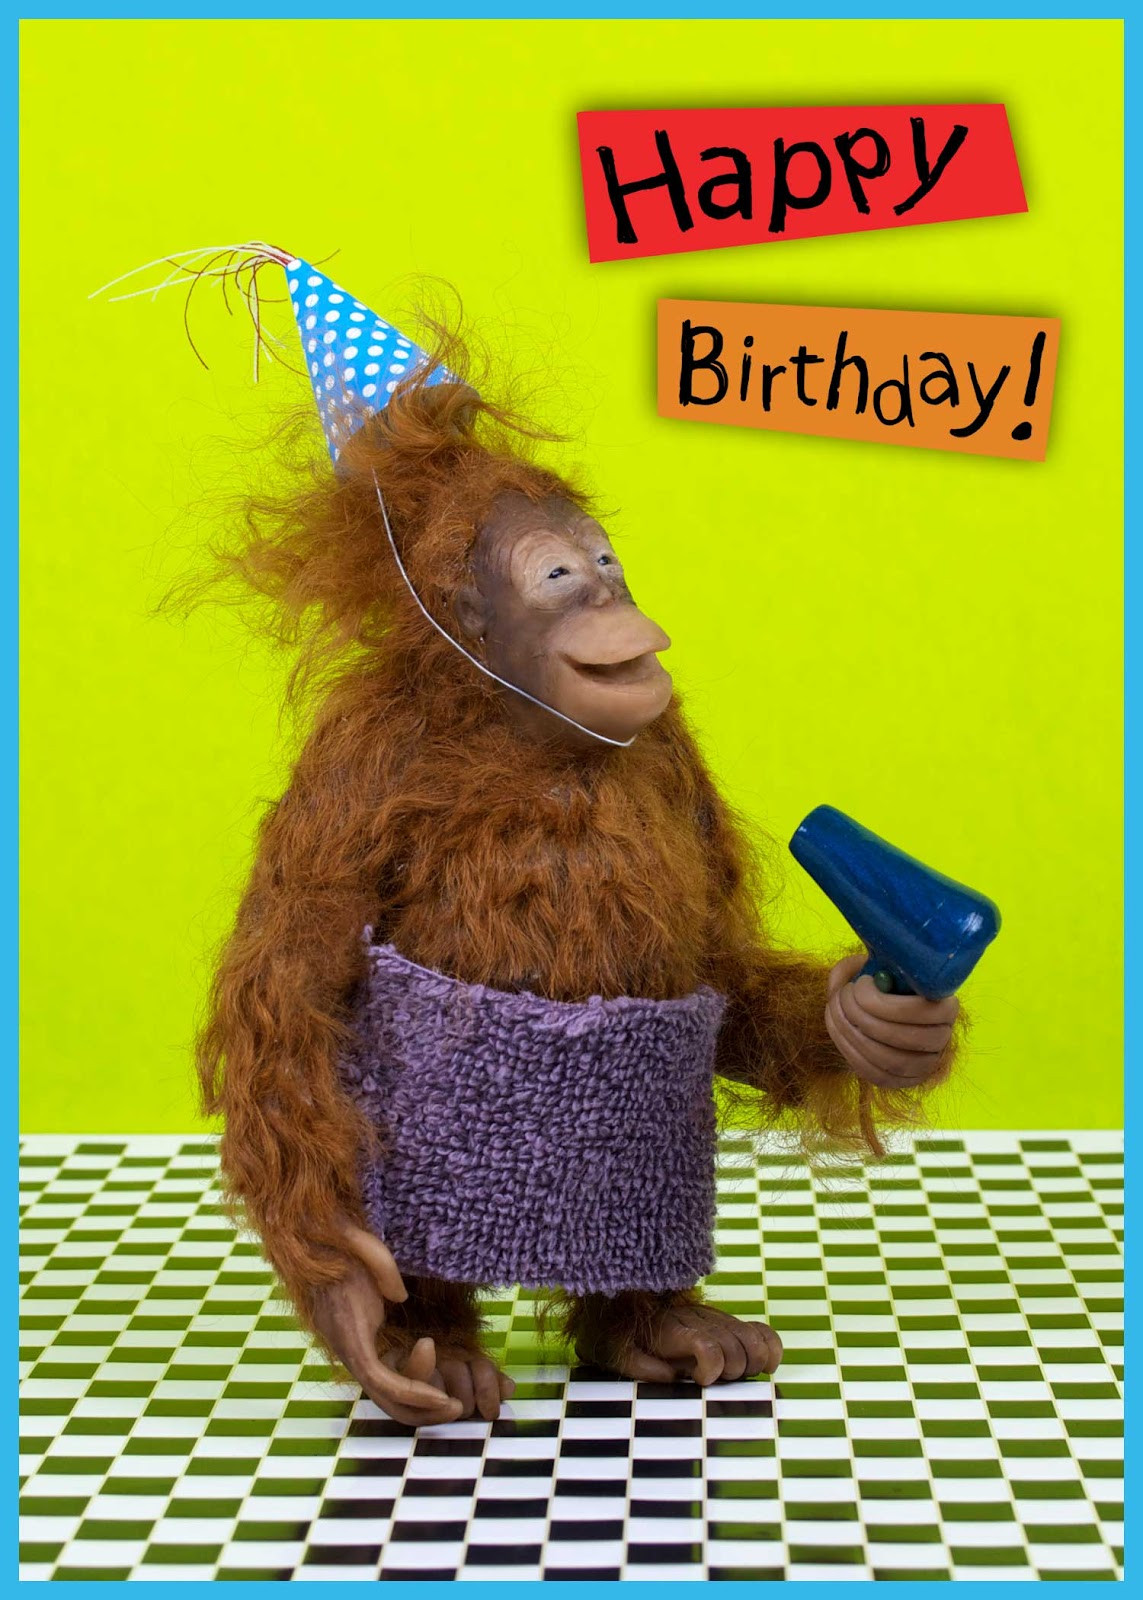 Happy Birthday Wish Funny
 Caroline Gray Work in Progress Kids’ Birthday Cards